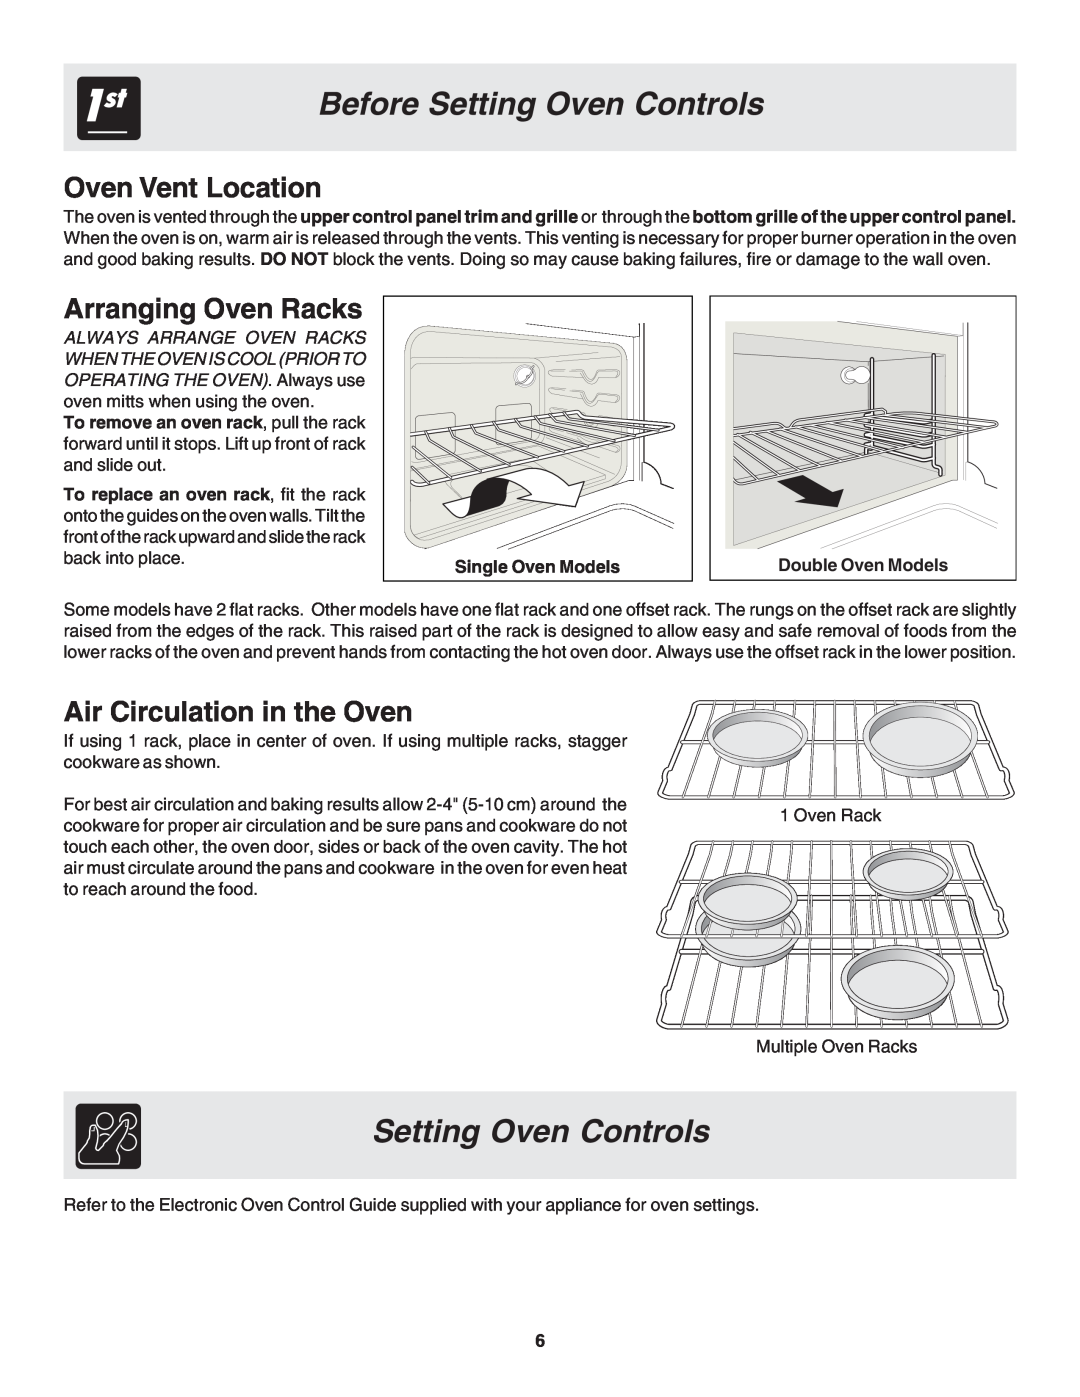 MicroFridge FGB24L2EC manual Setting Oven Controls, Oven Vent Location, Arranging Oven Racks, Air Circulation in the Oven 